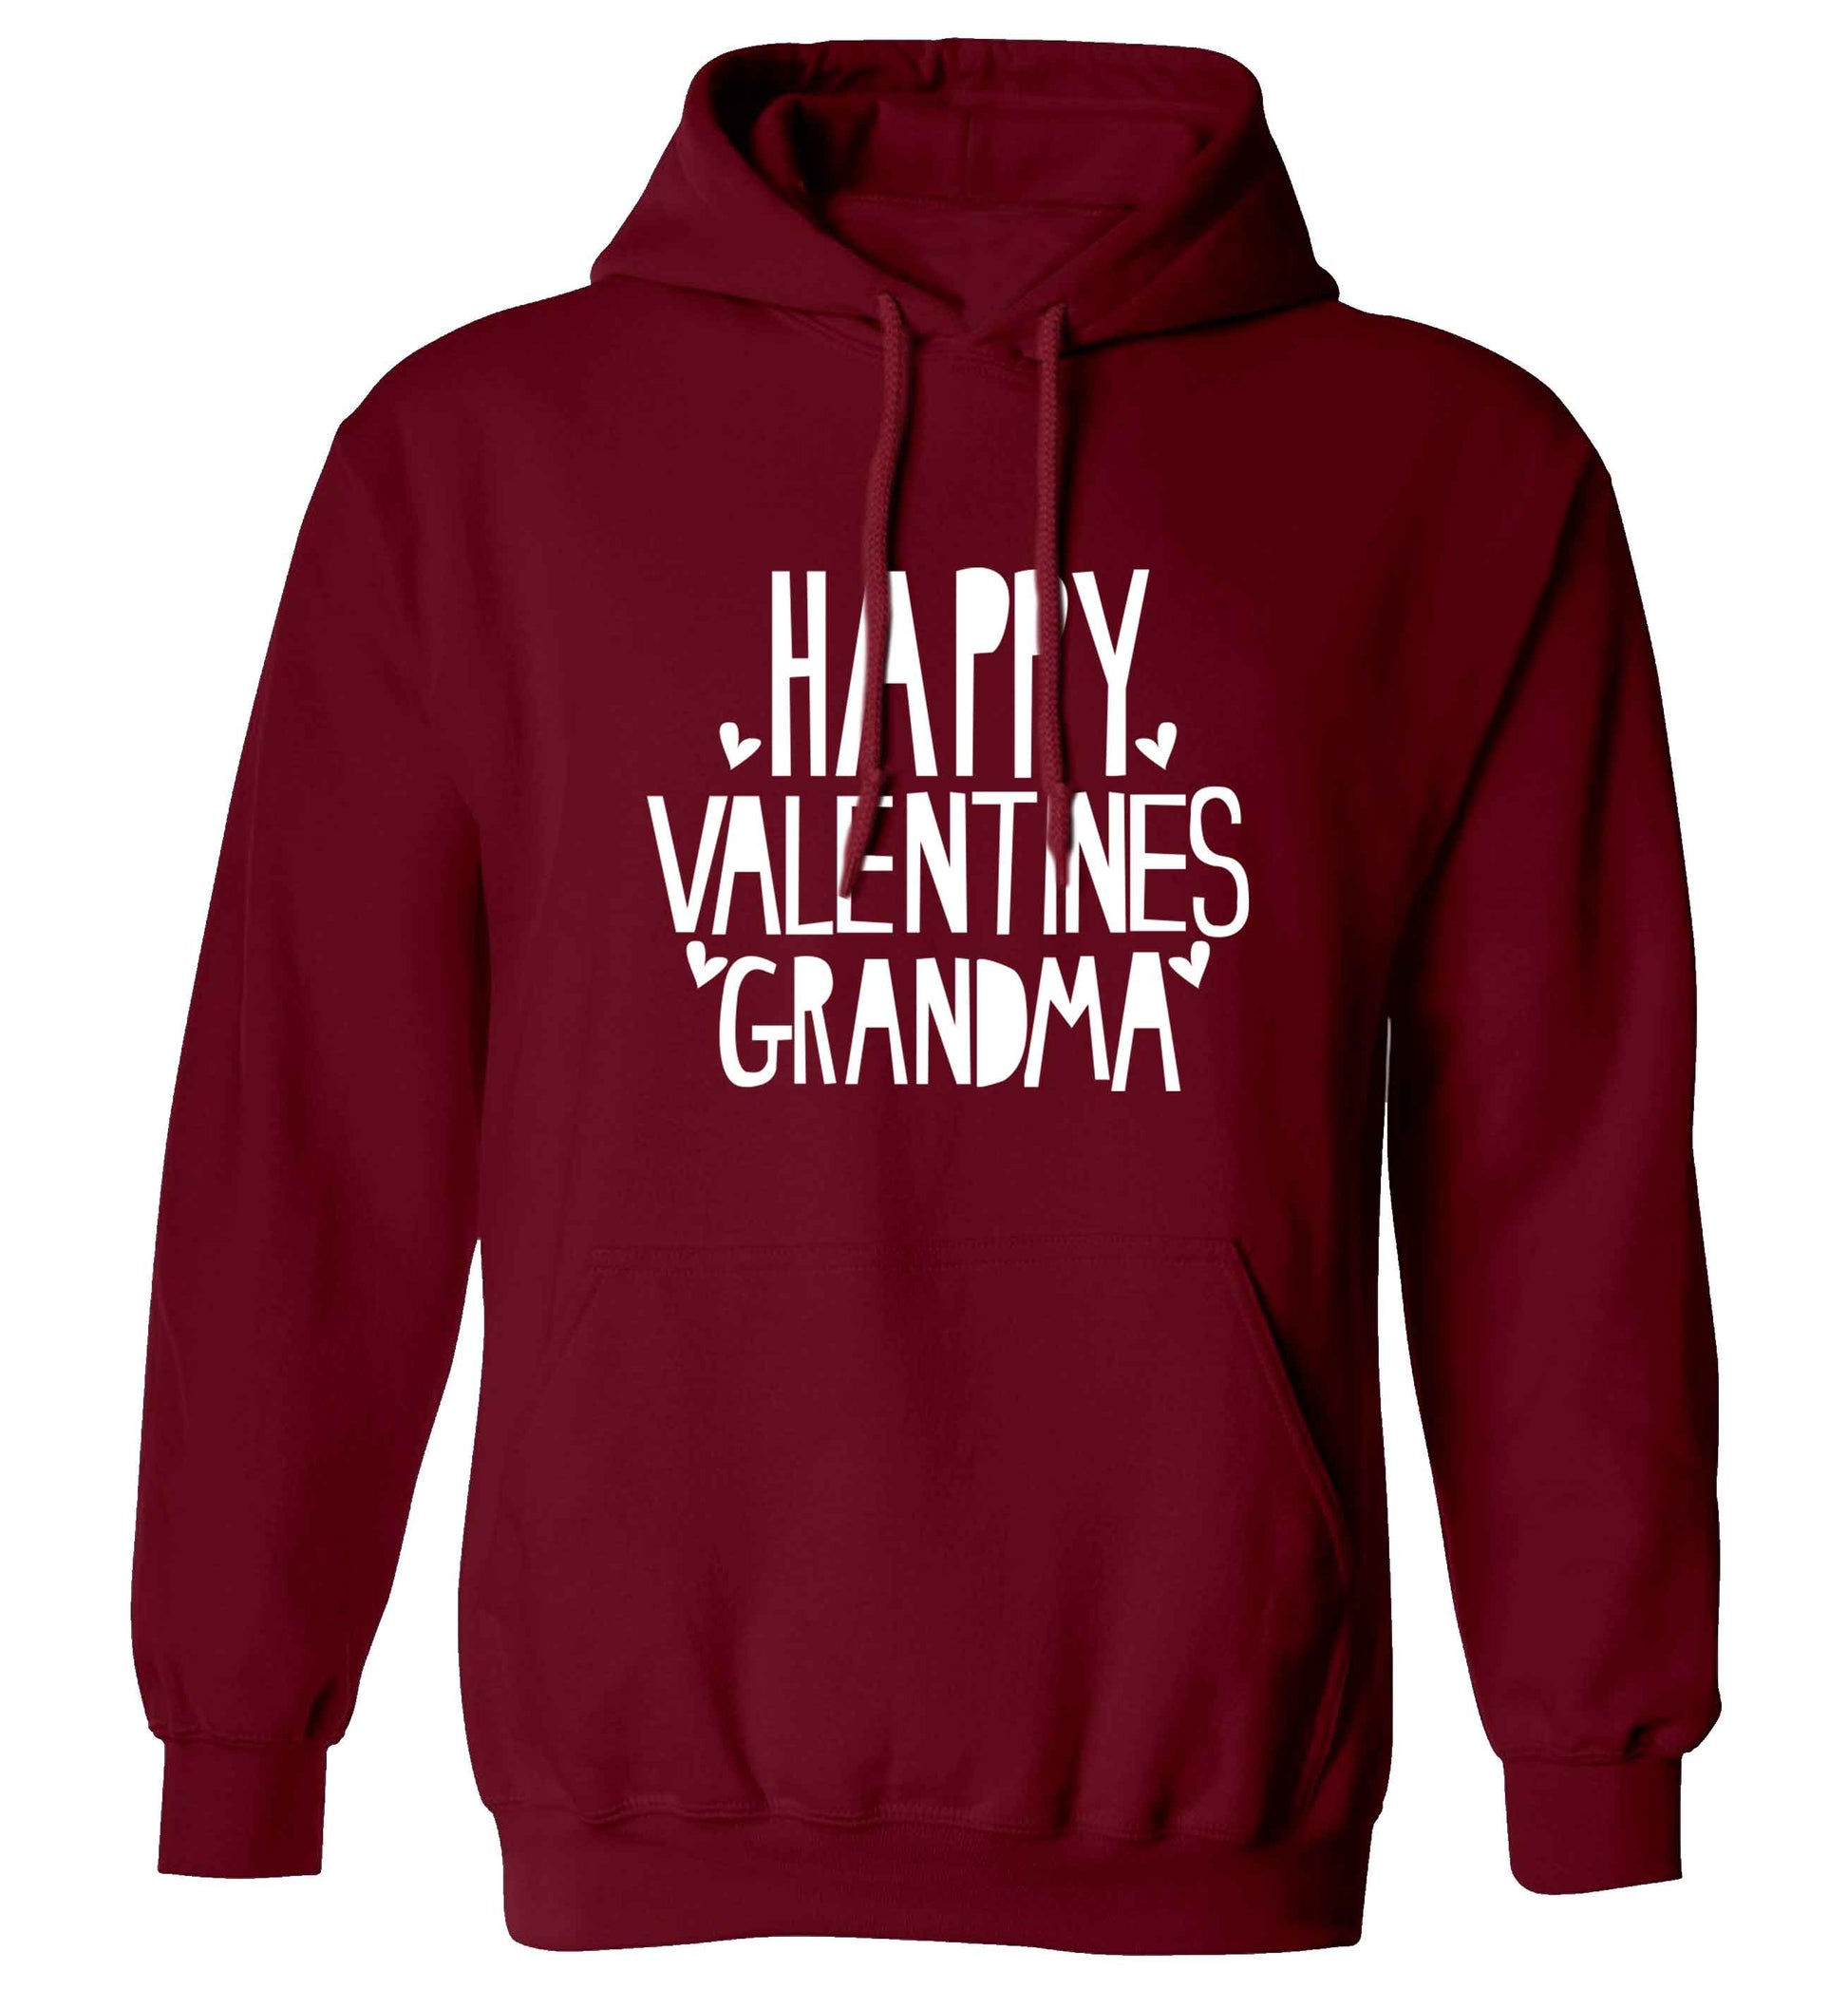 Happy valentines grandma adults unisex maroon hoodie 2XL